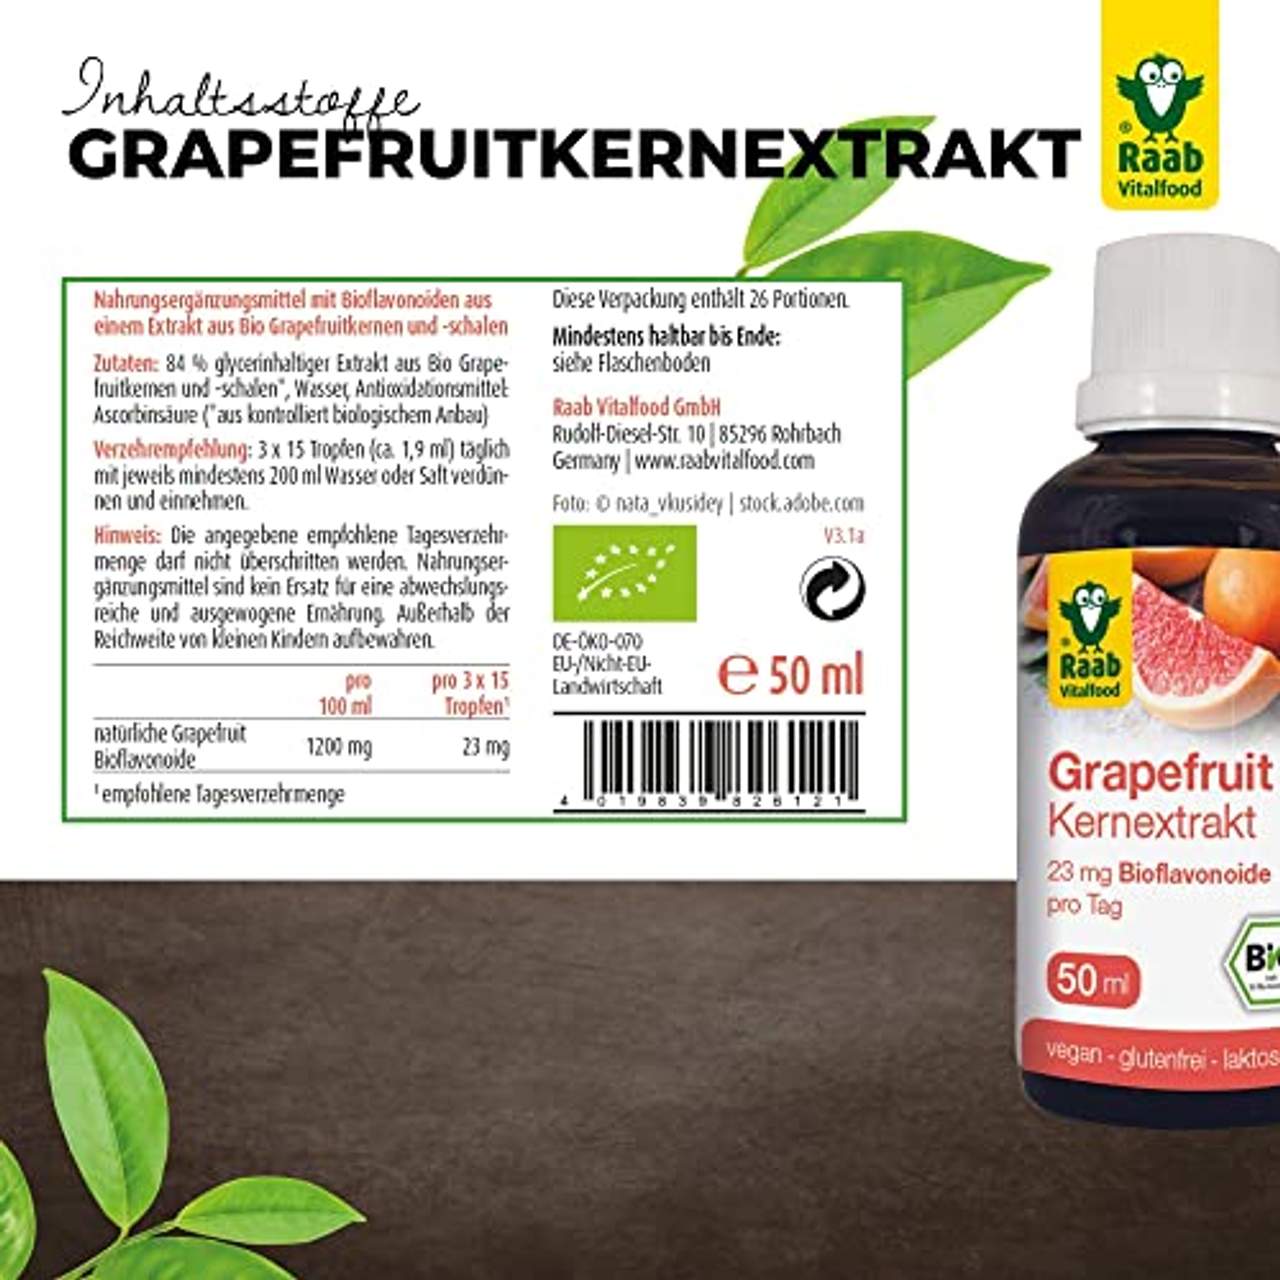 Raab Vitalfood Bio Grapefruit-Kernextrakt mit Bioflavonoiden